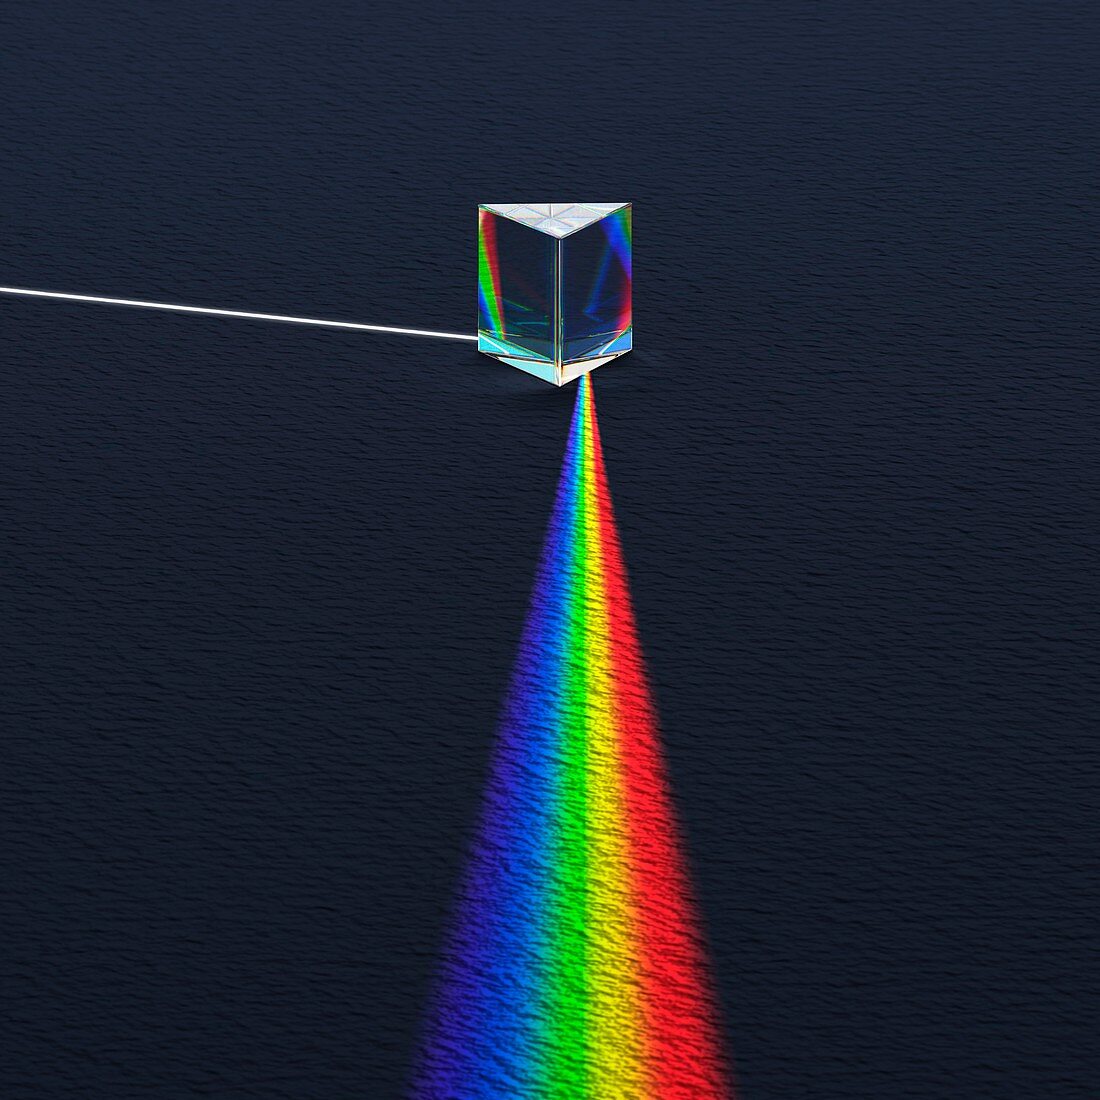 Prism dispersing light into spectrum